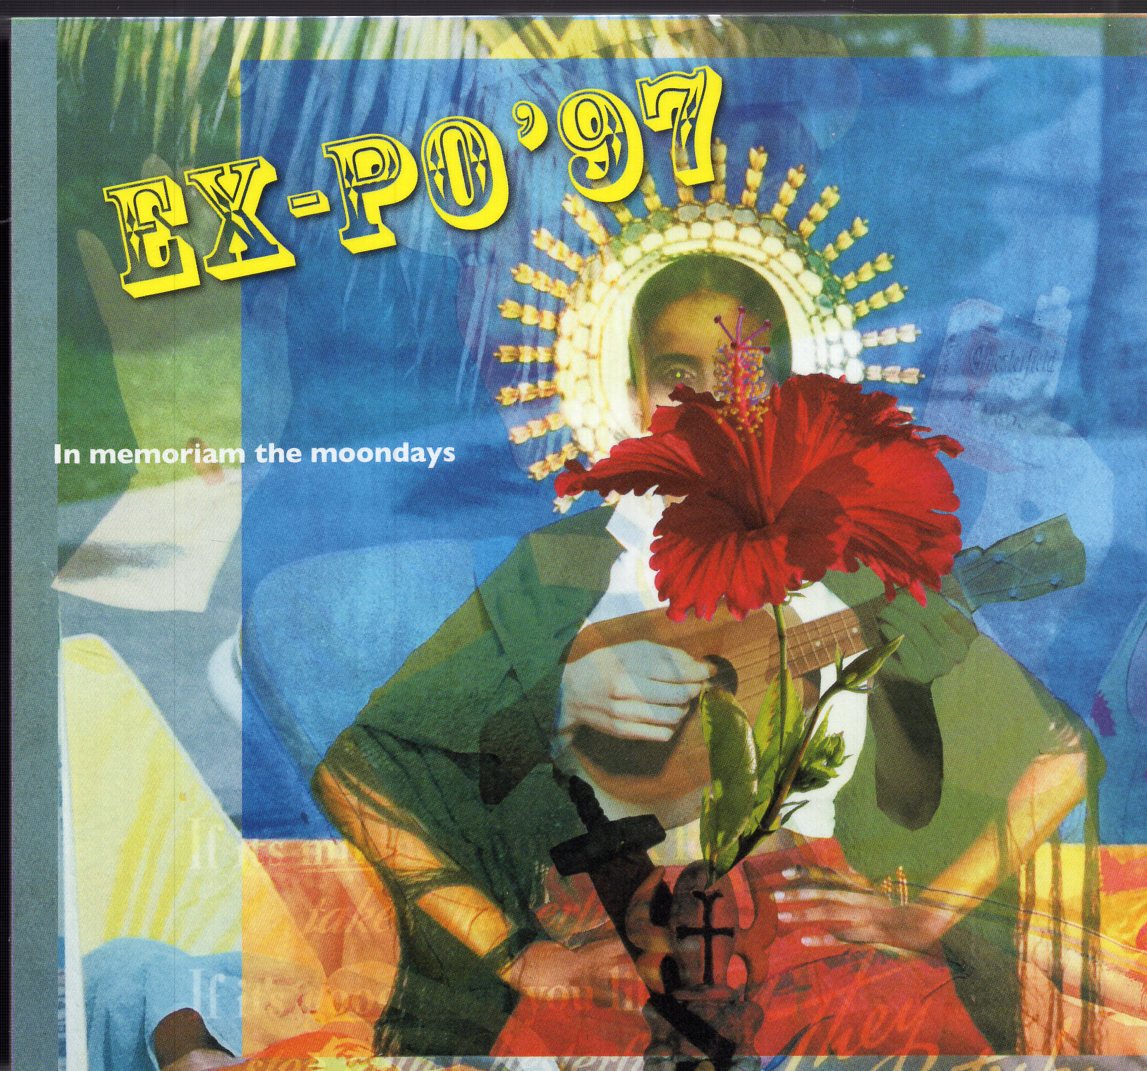 Monkee Tambourine Record ゲームCD EX-PO'97 in memoriam the moondays